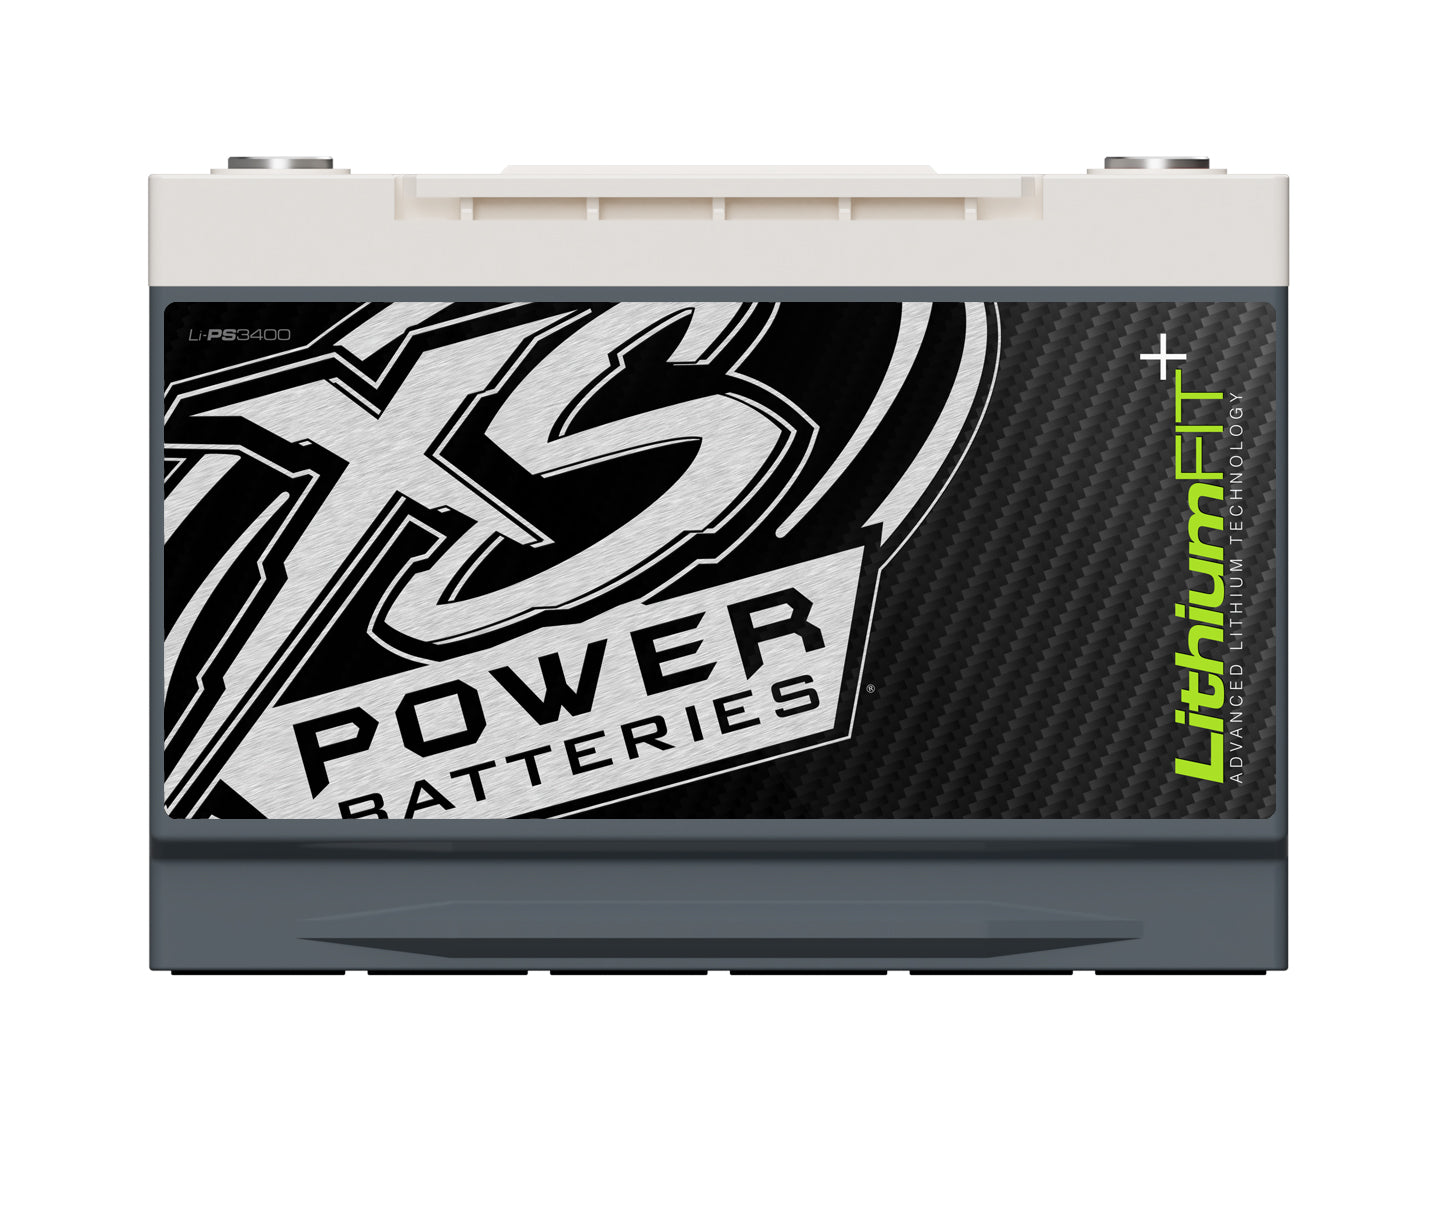 Li-PS3400 XS Power 12VDC Lithium Powersports Vehicle Battery 1200A 66Ah Group 34